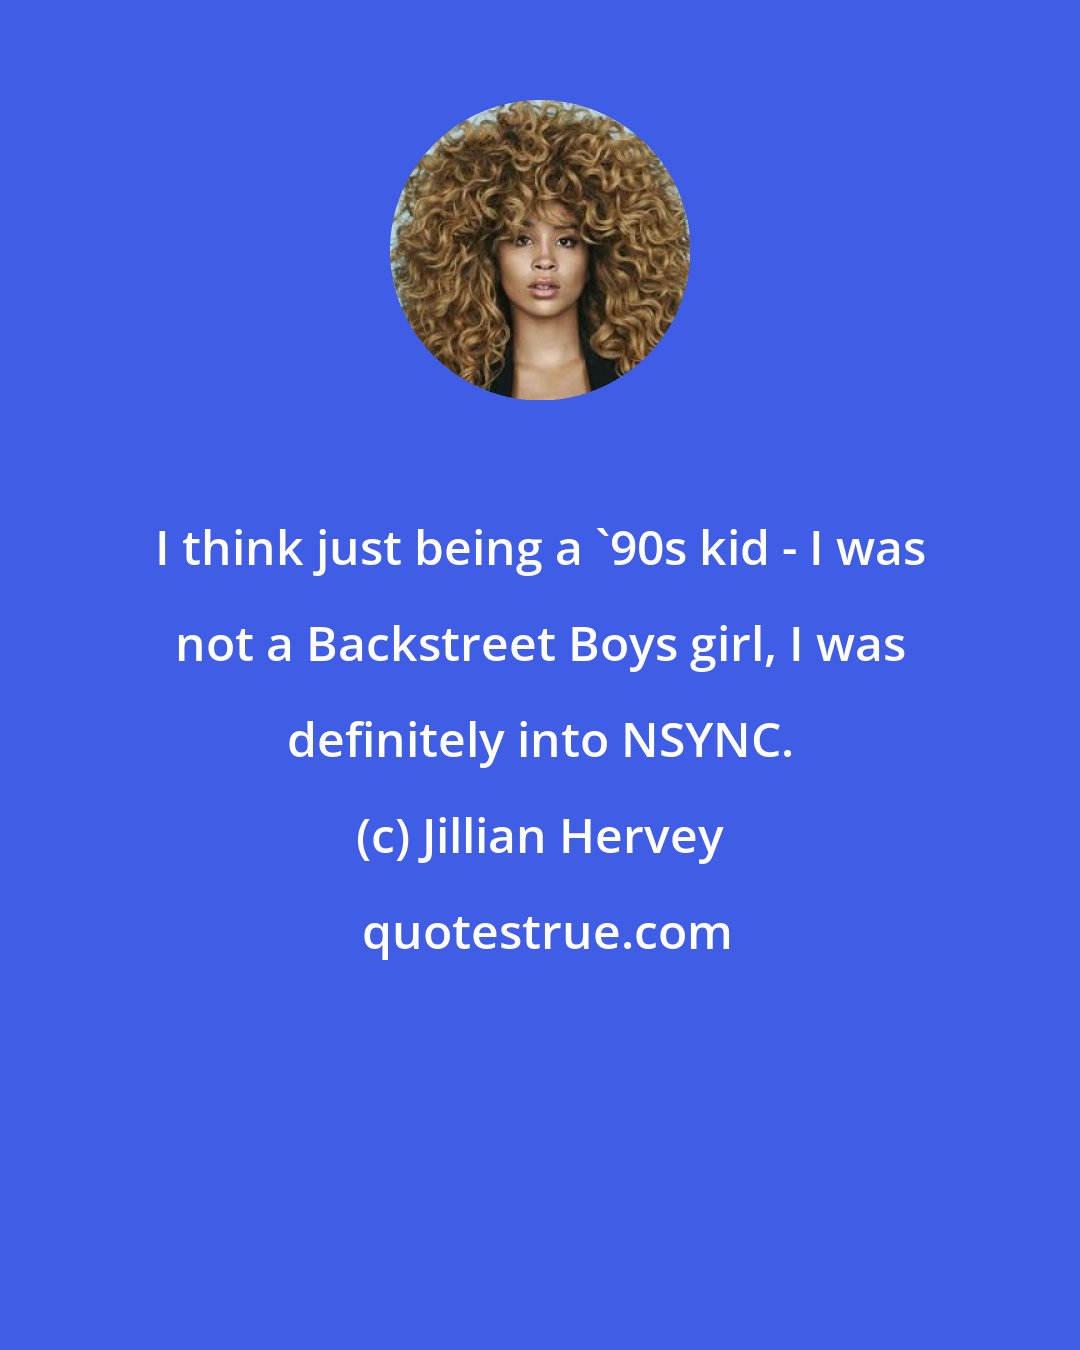 Jillian Hervey: I think just being a '90s kid - I was not a Backstreet Boys girl, I was definitely into NSYNC.